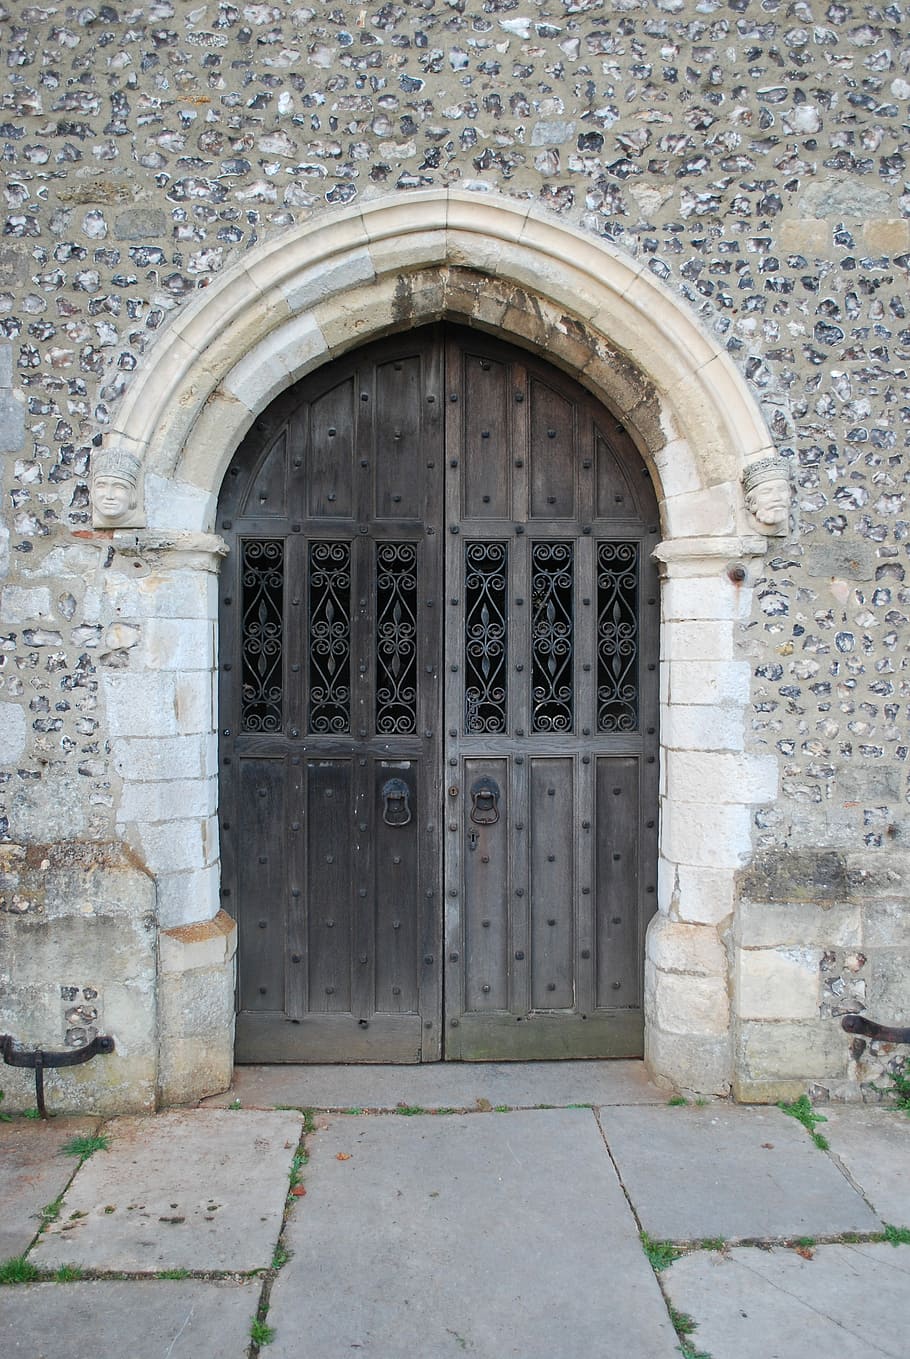 Door, Church, Old, Architecture, entrance, religion, doorway, stone, building, ancient